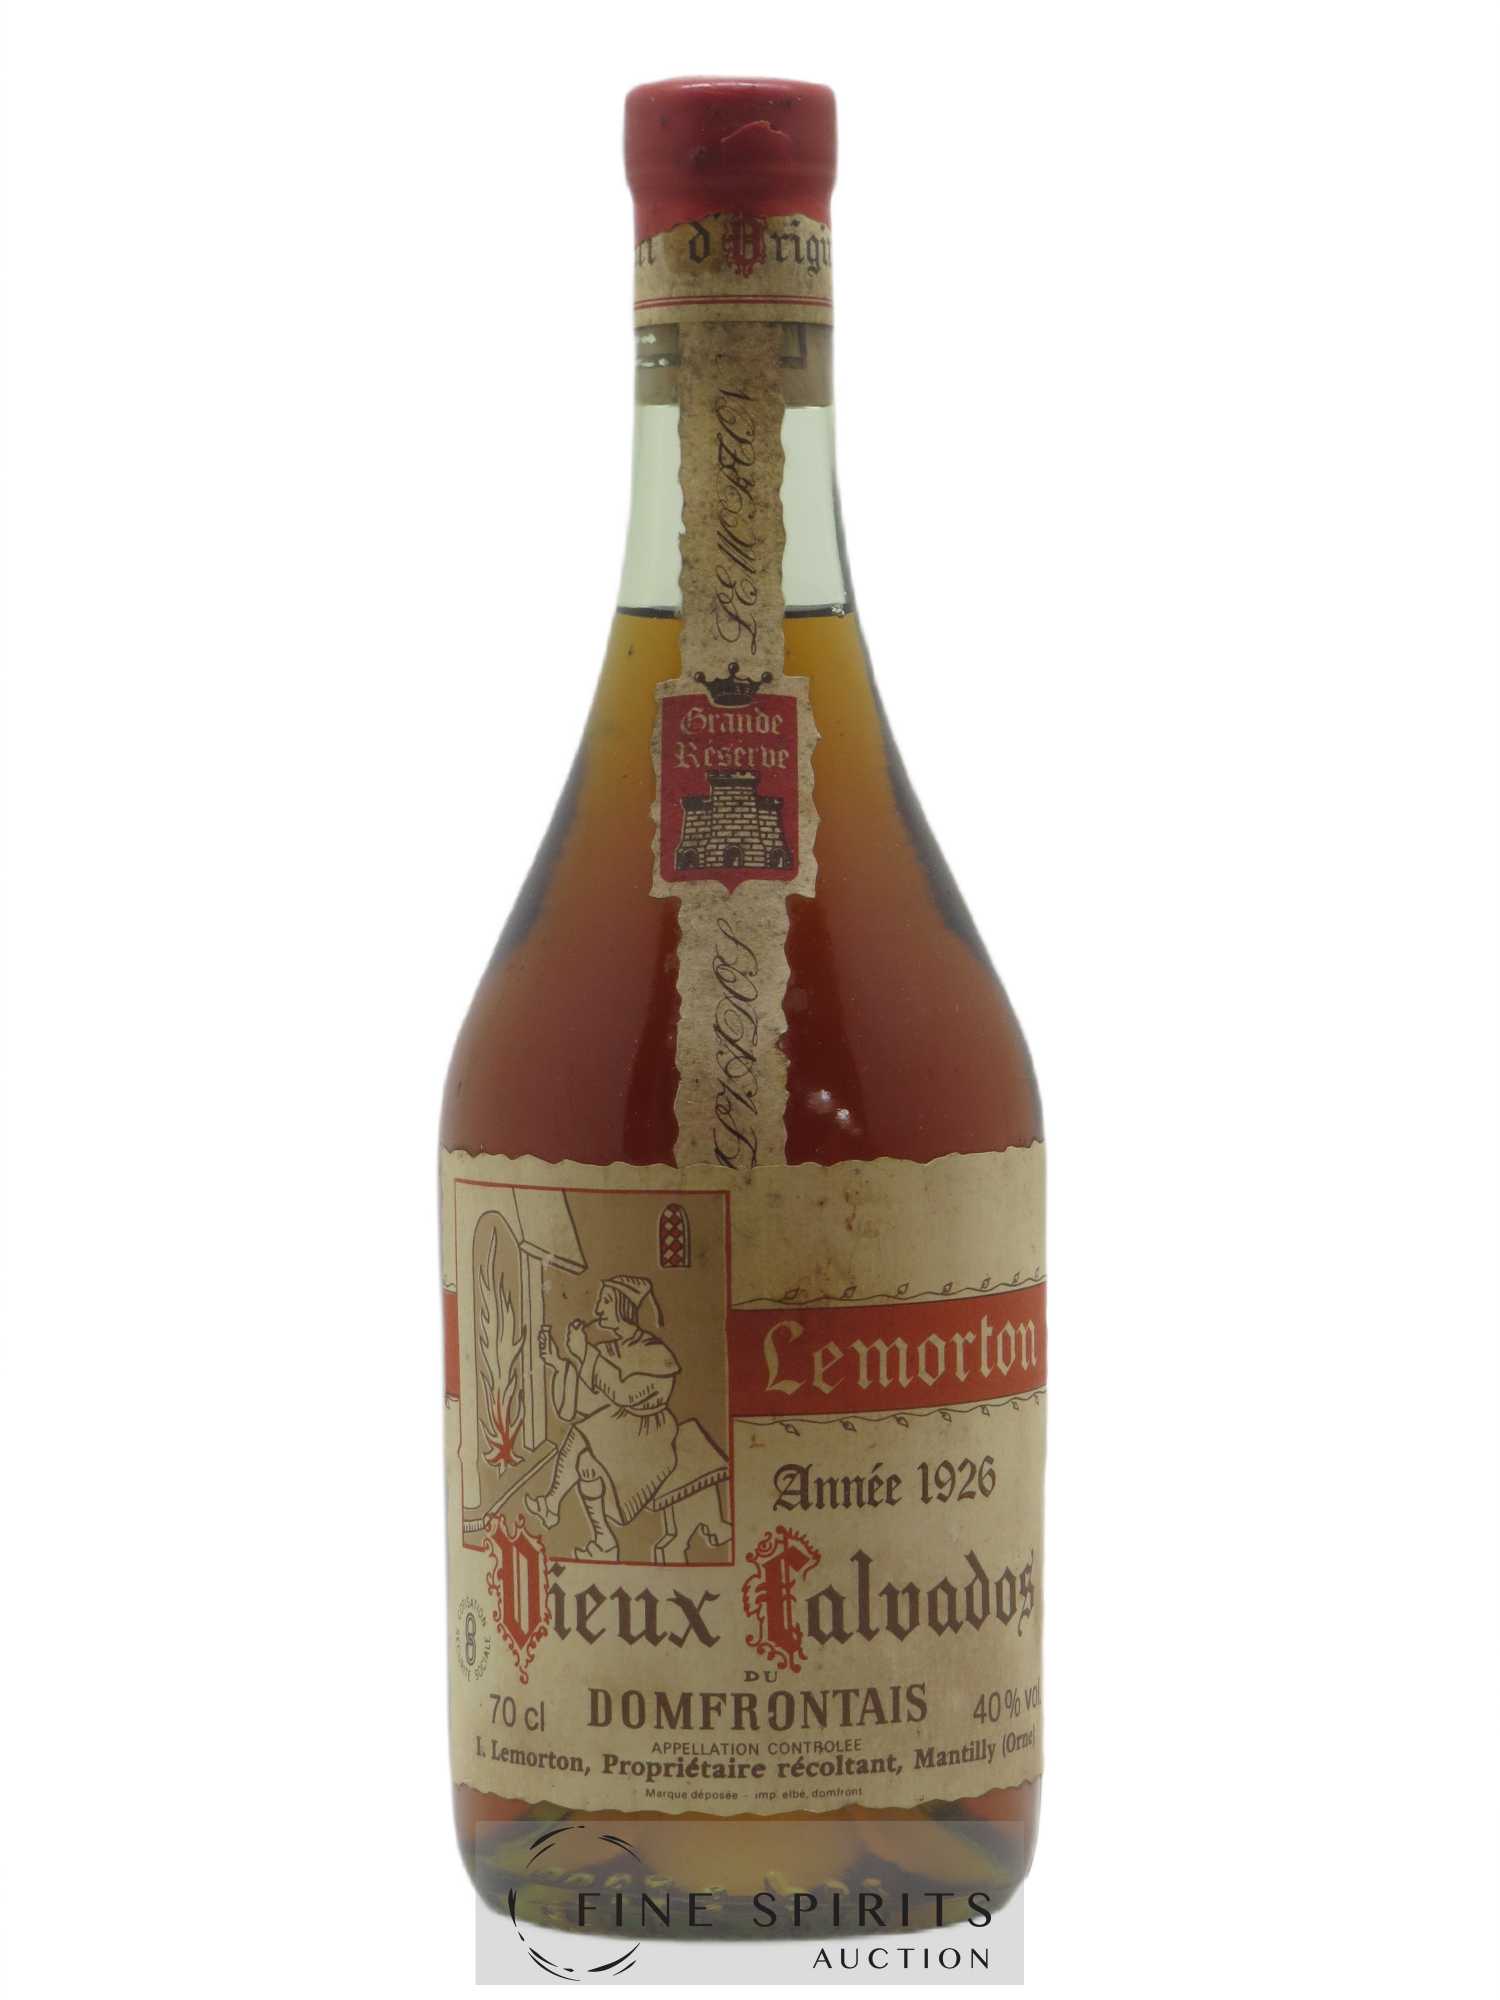 Lemorton 1926 Of. Vieux Calvados du Domfrontais Grande Réserve 